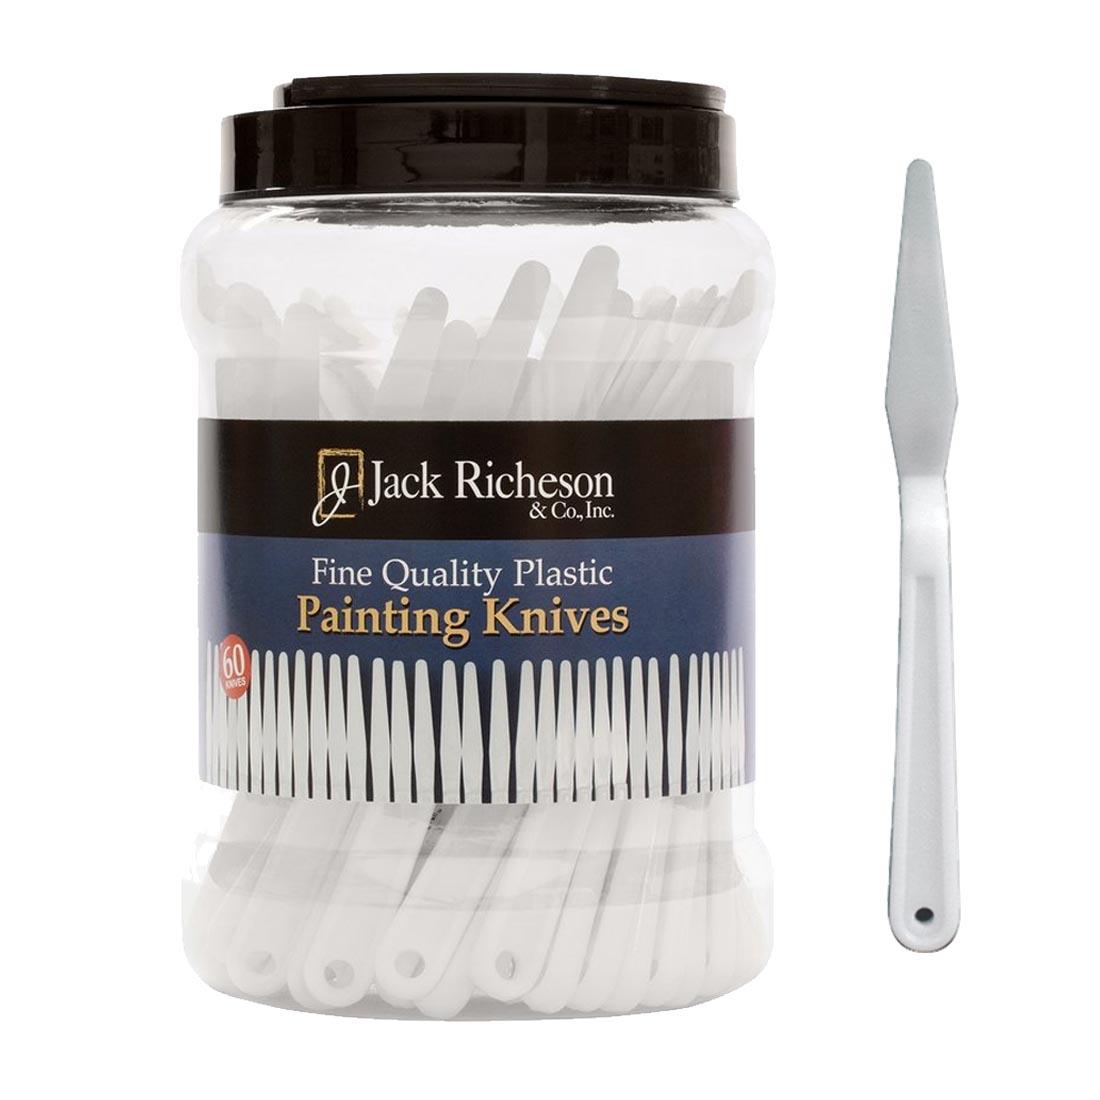 Richeson Plastic Trowel Palette Knives Jar with a single knife beside it